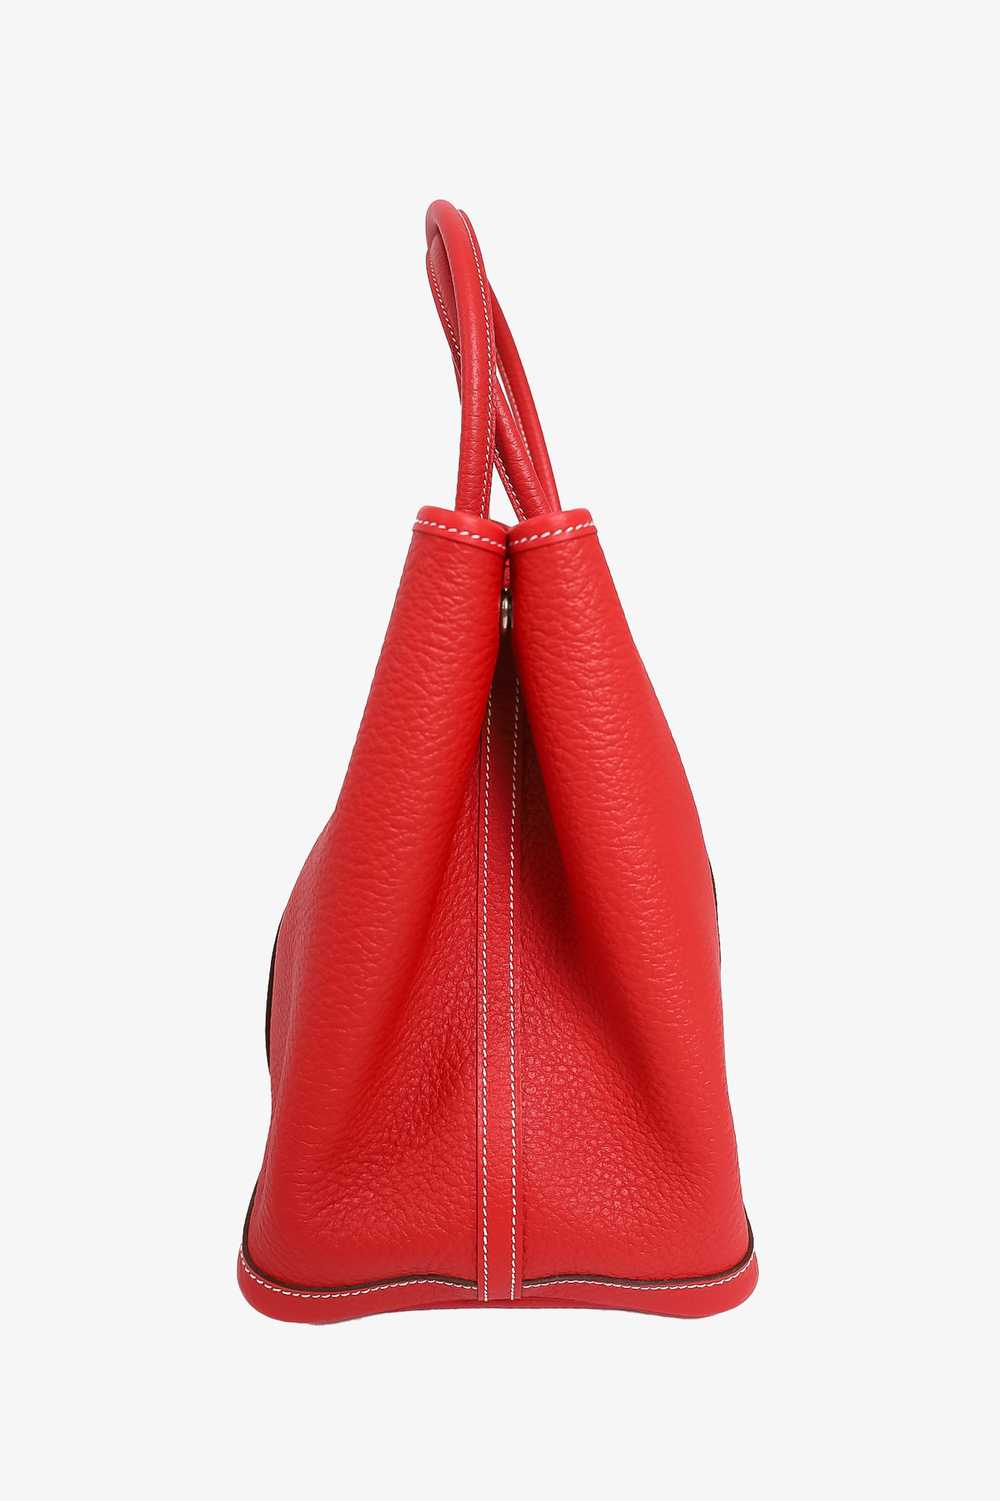 Hermès 2013 Red Negonda Garden Party 36 Tote Bag - image 7